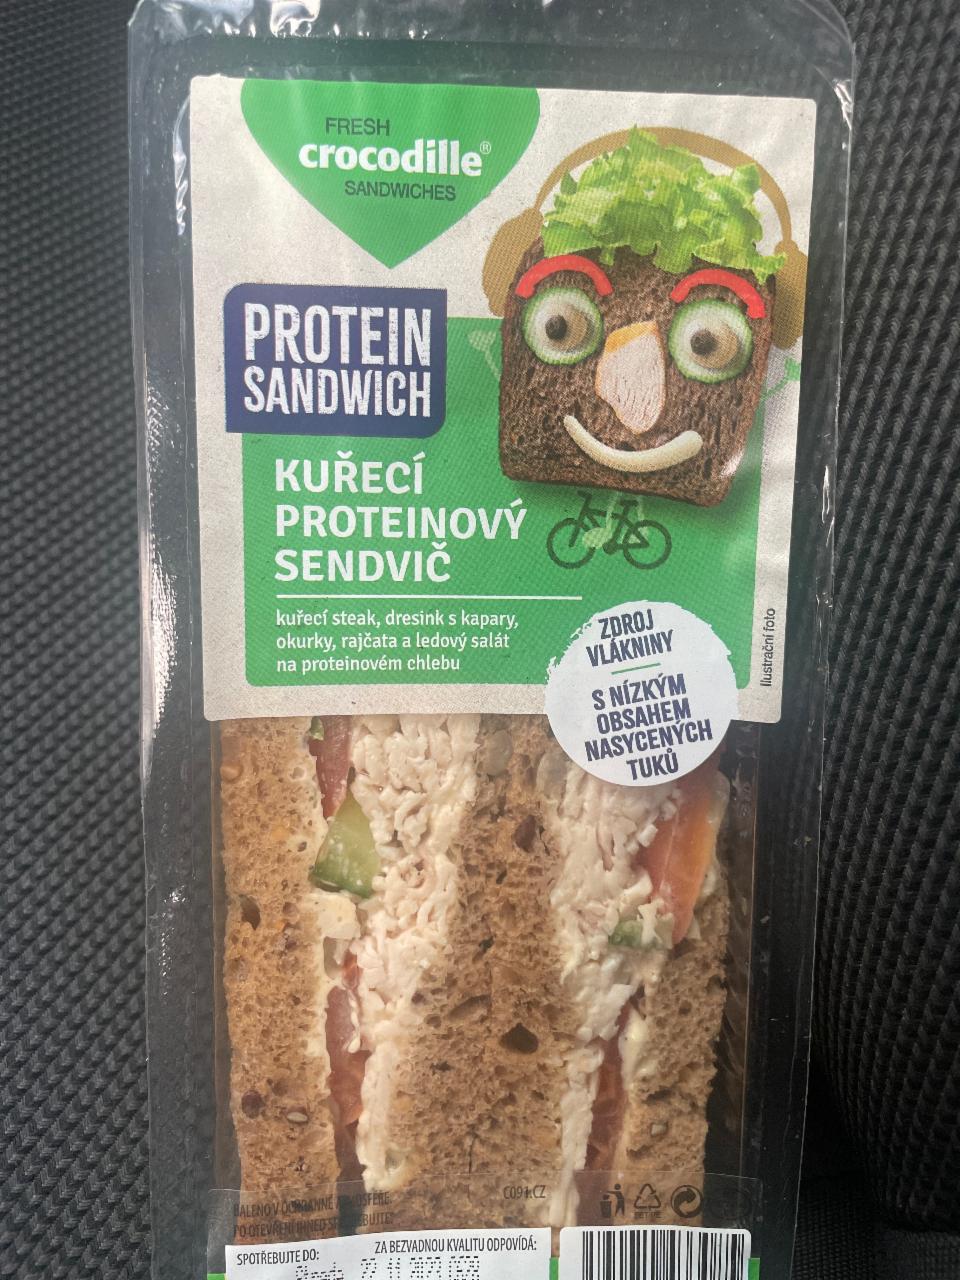 Fotografie - Protein sandwich fresh kuřecí proteinový sandvič crocodile